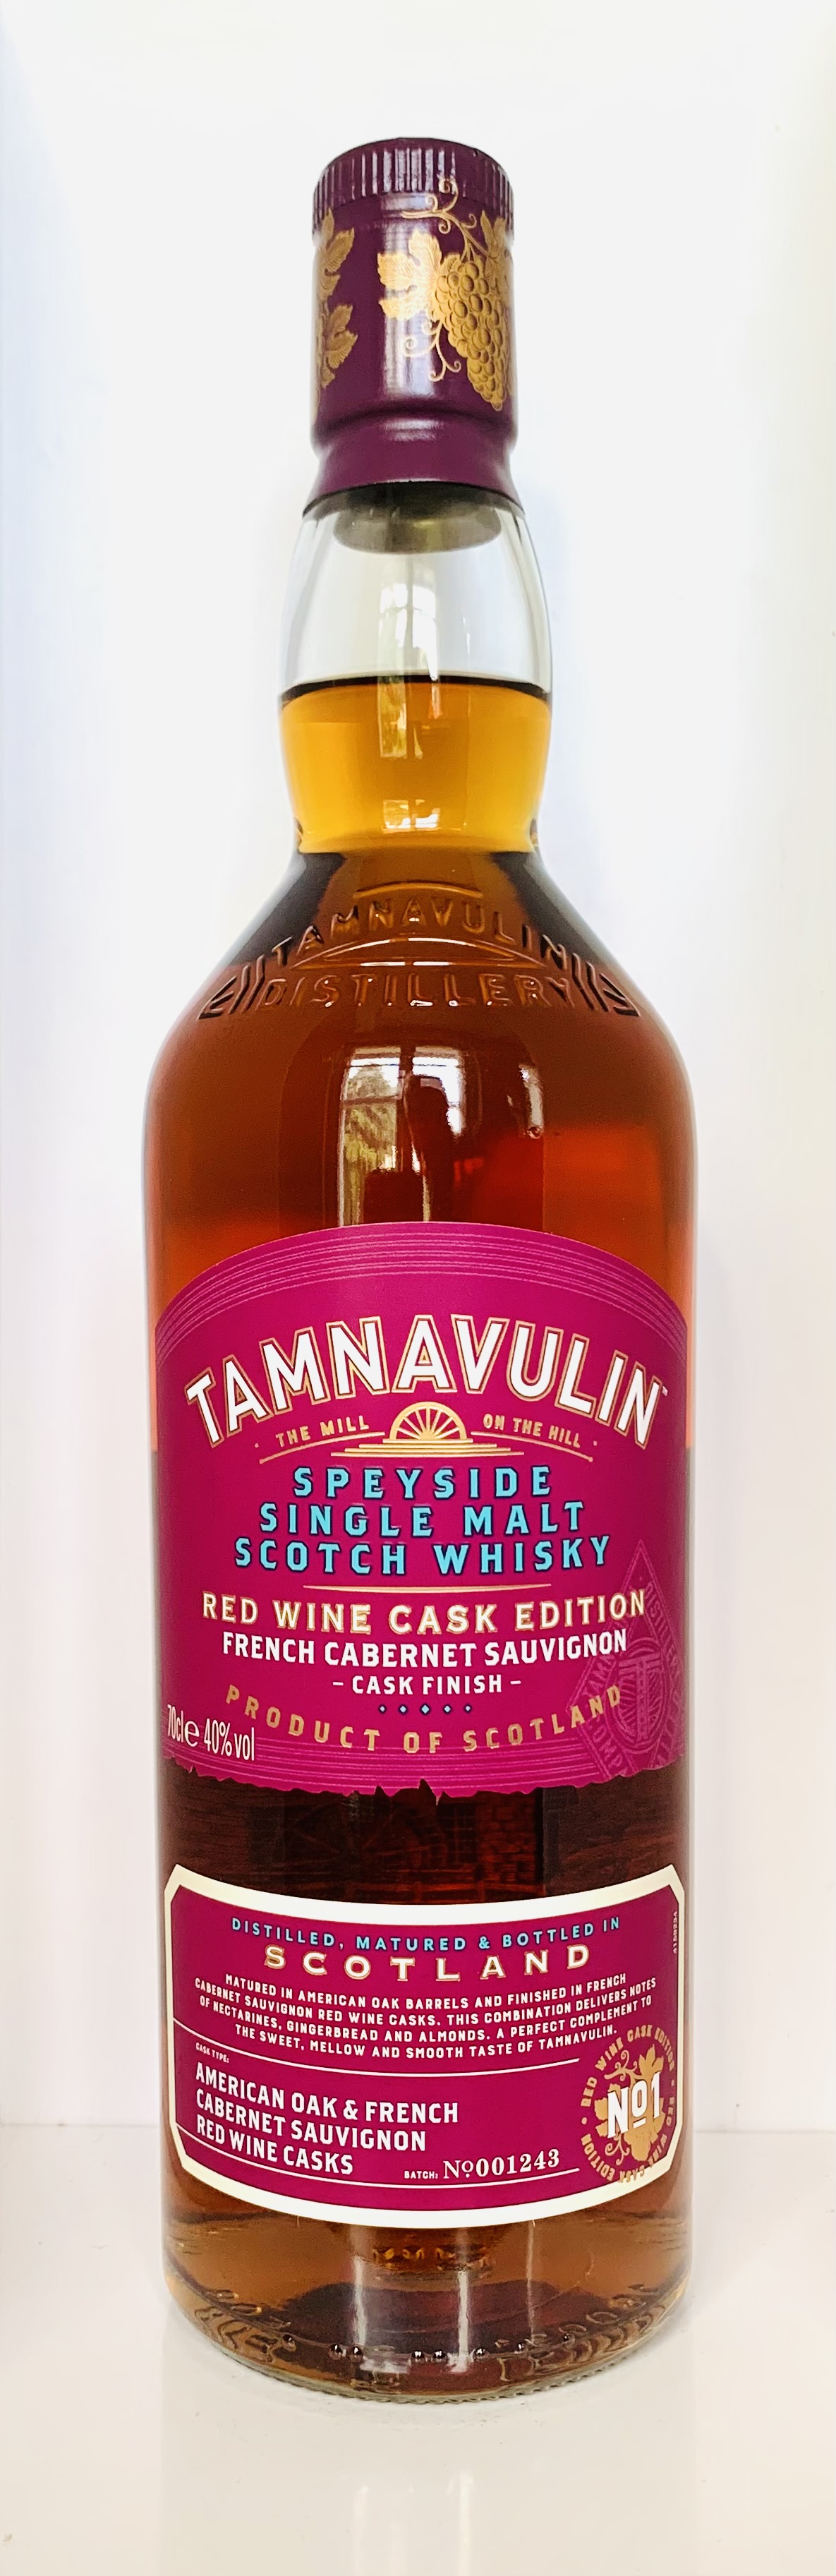 Tamnavulin Red Wine Cask Edition No.1 French Cabernet Sauvignon Cask Finish